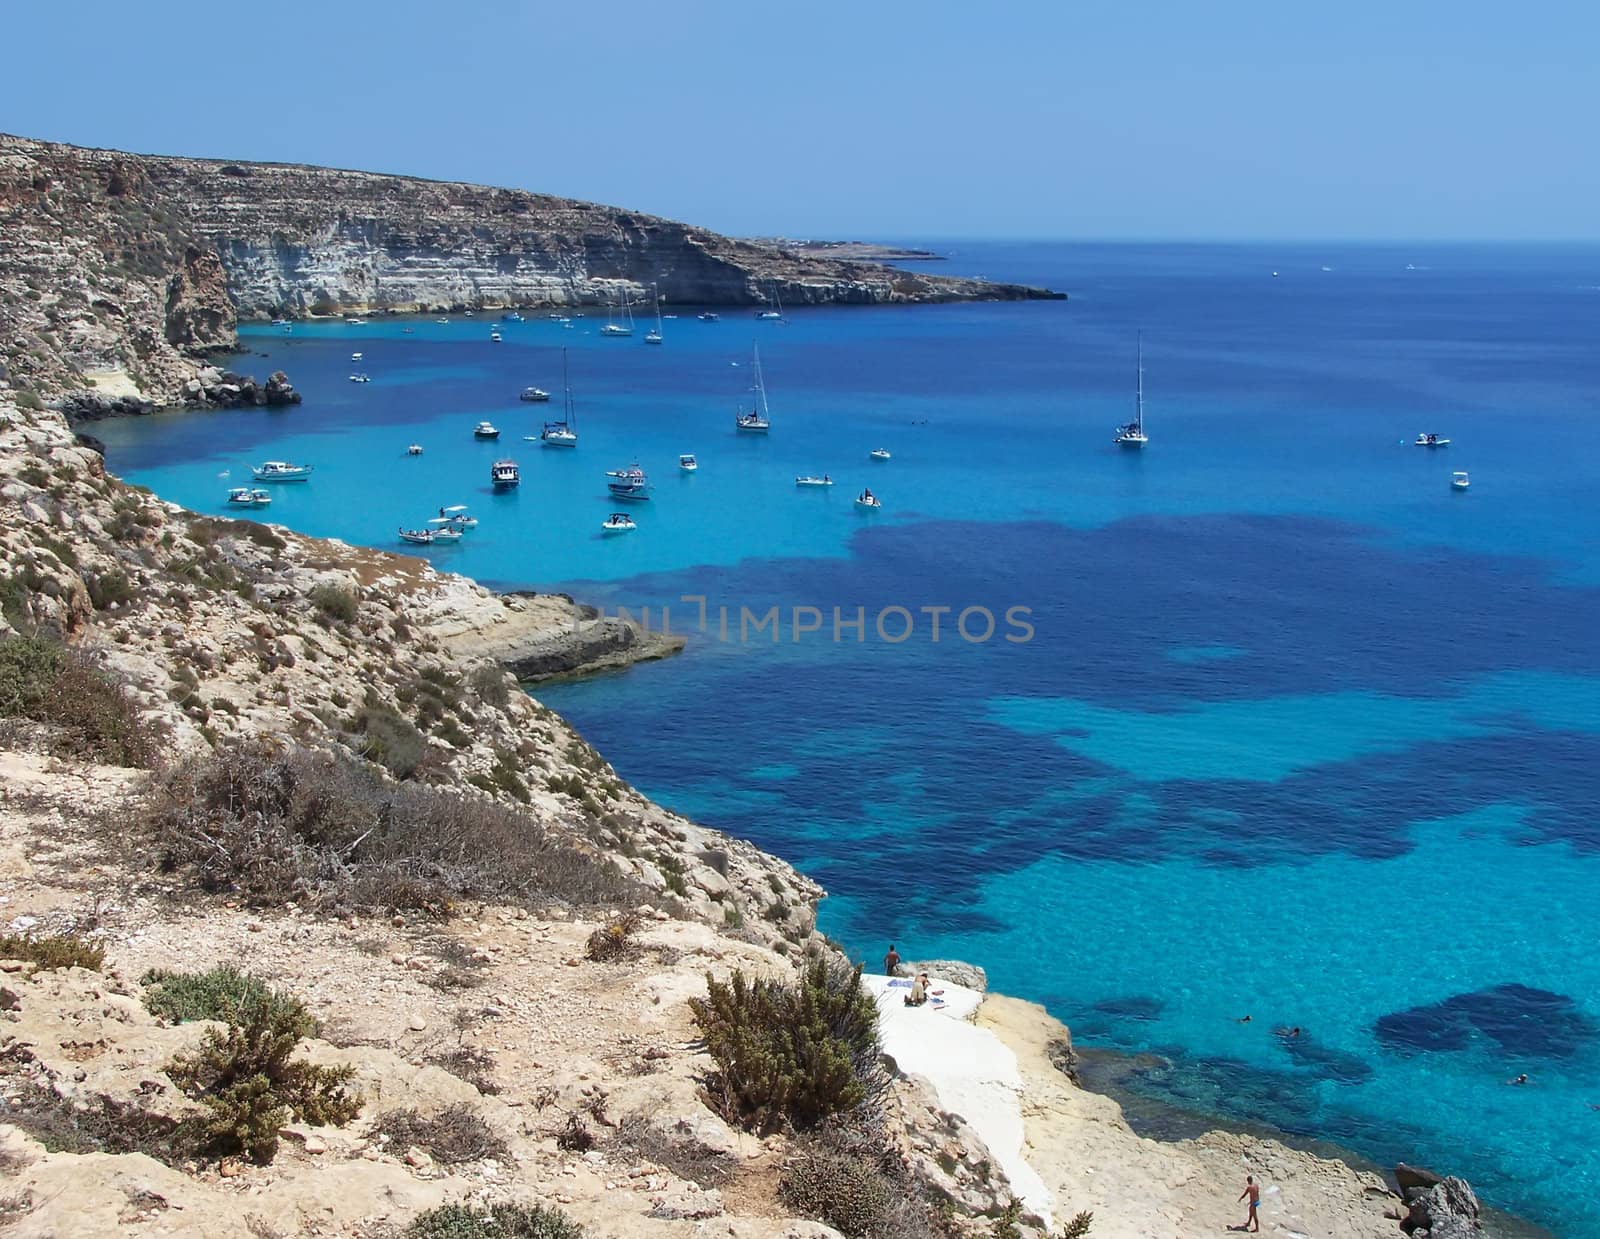 Boats on the island of rabbits- Lampedusa, Sicily by gandolfocannatella